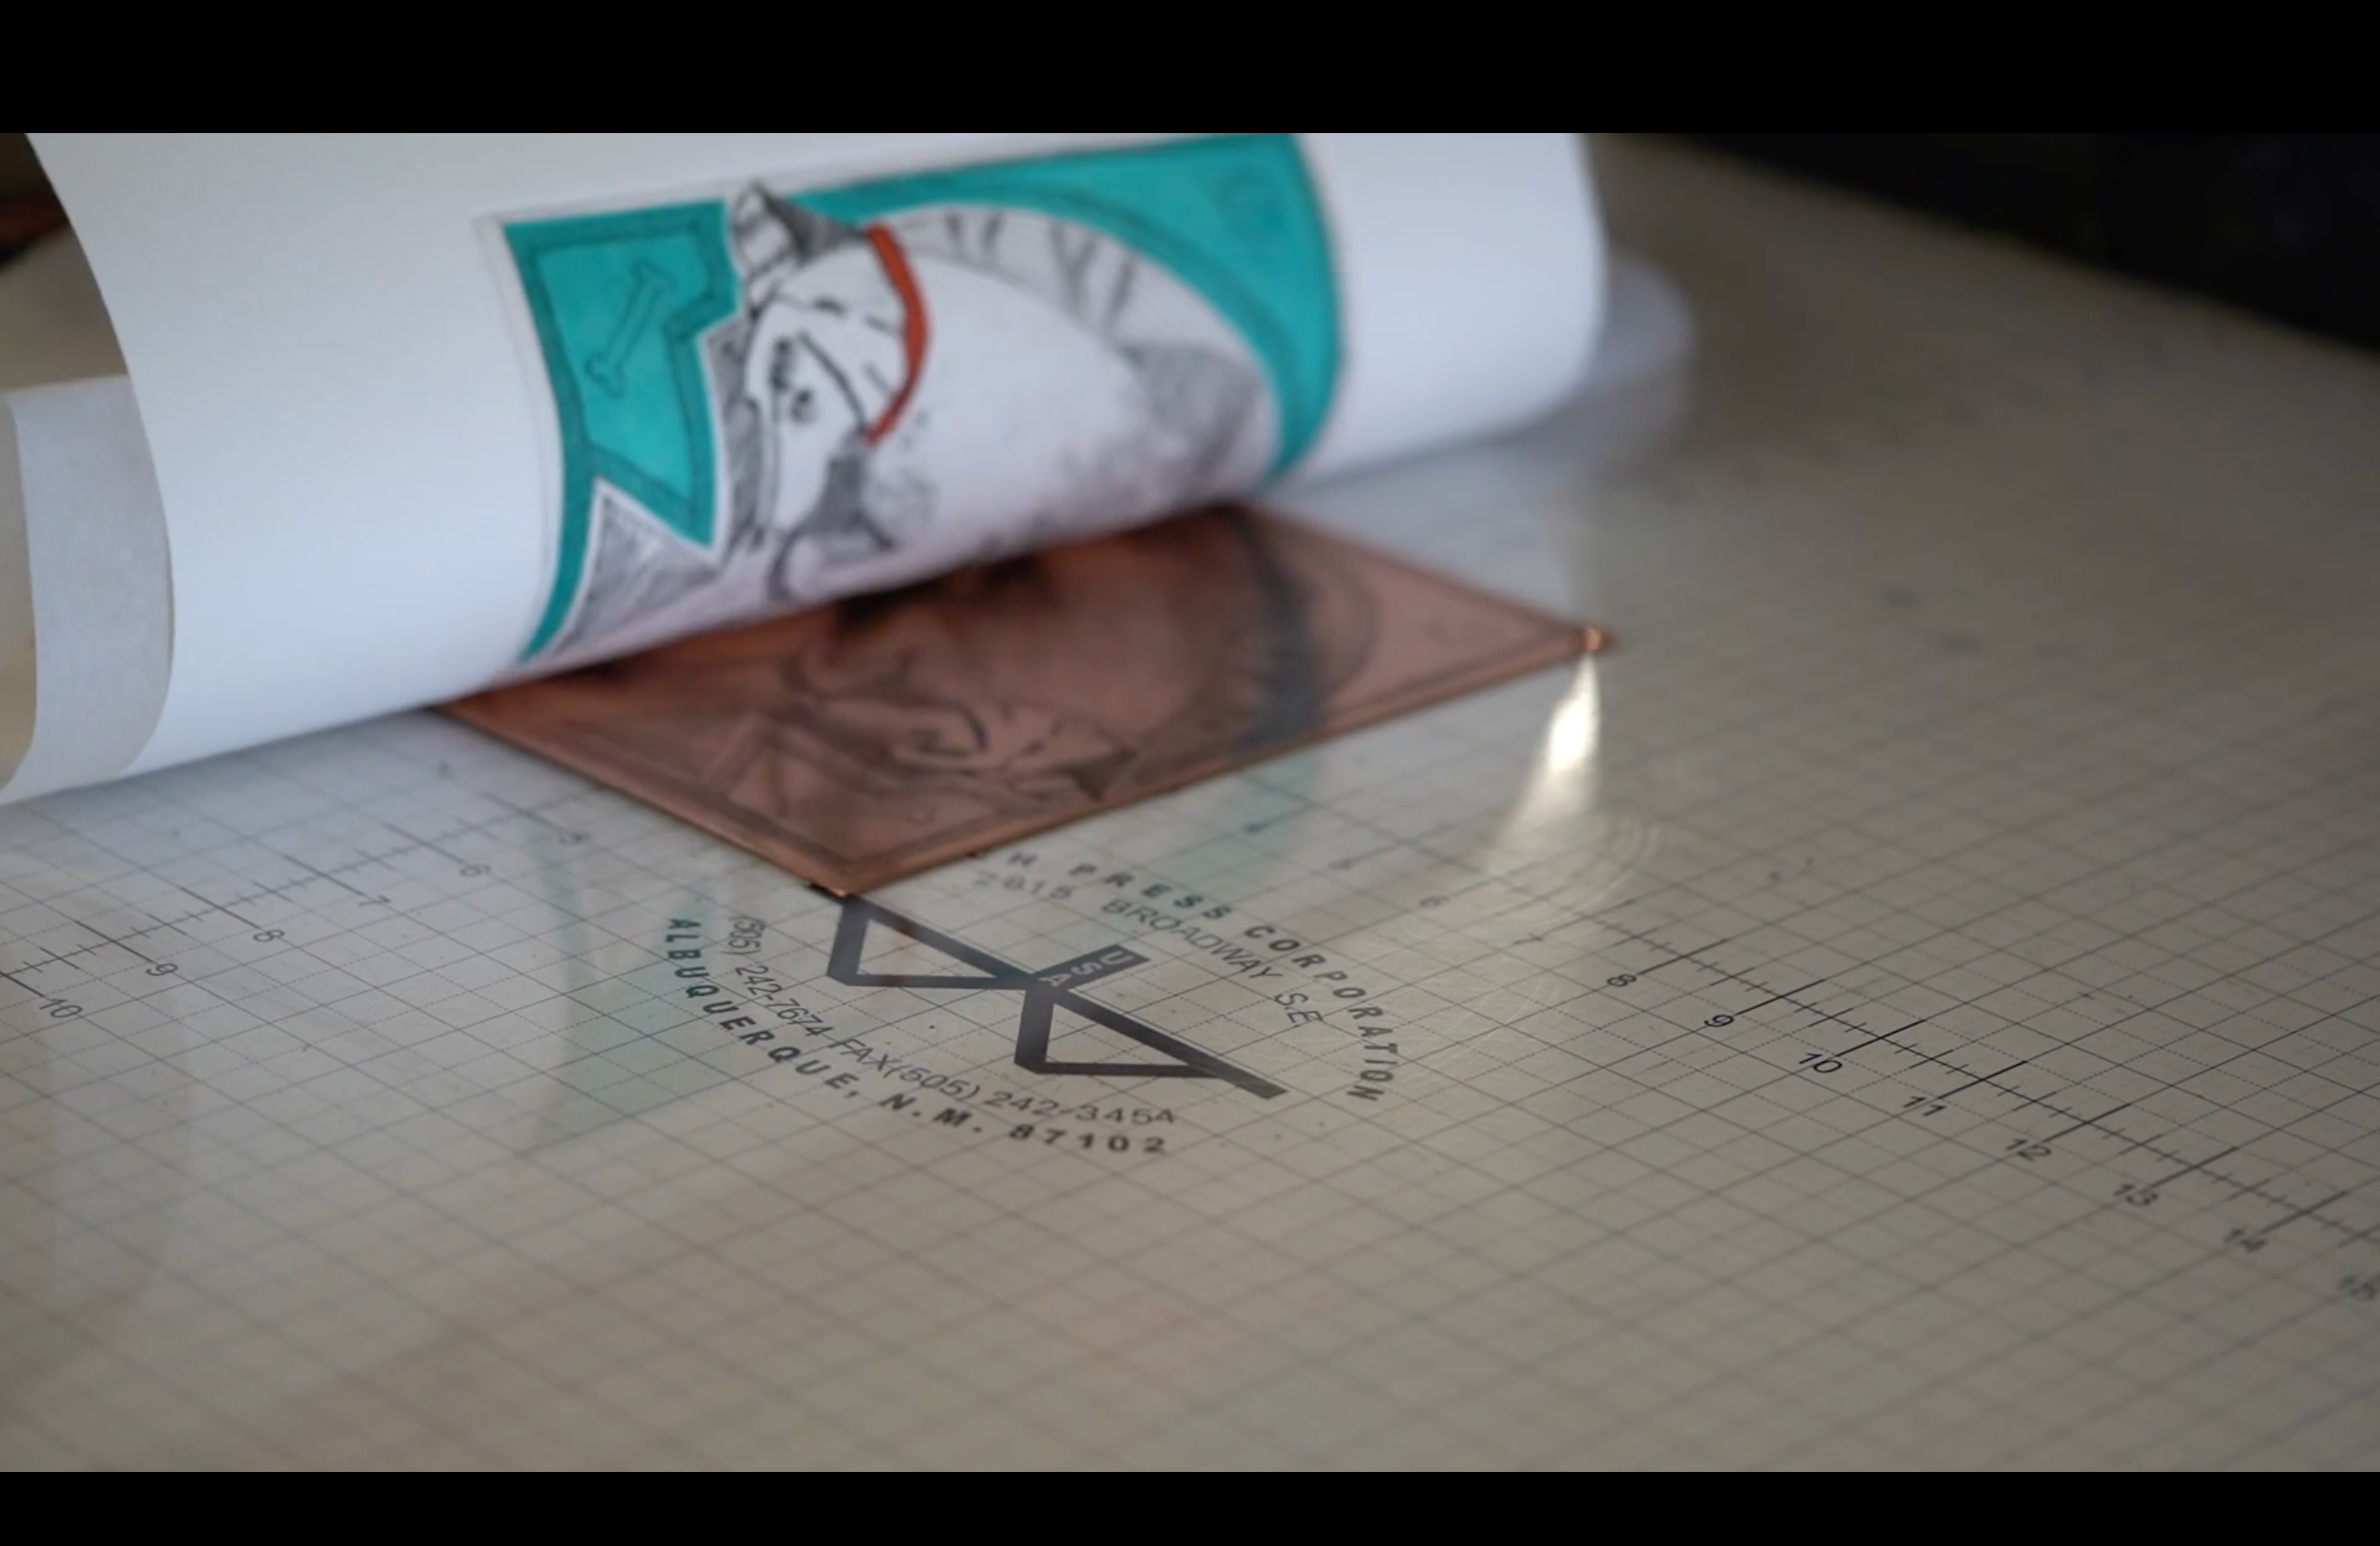 Printmaking with the 'Sunlit' Machine on Vimeo